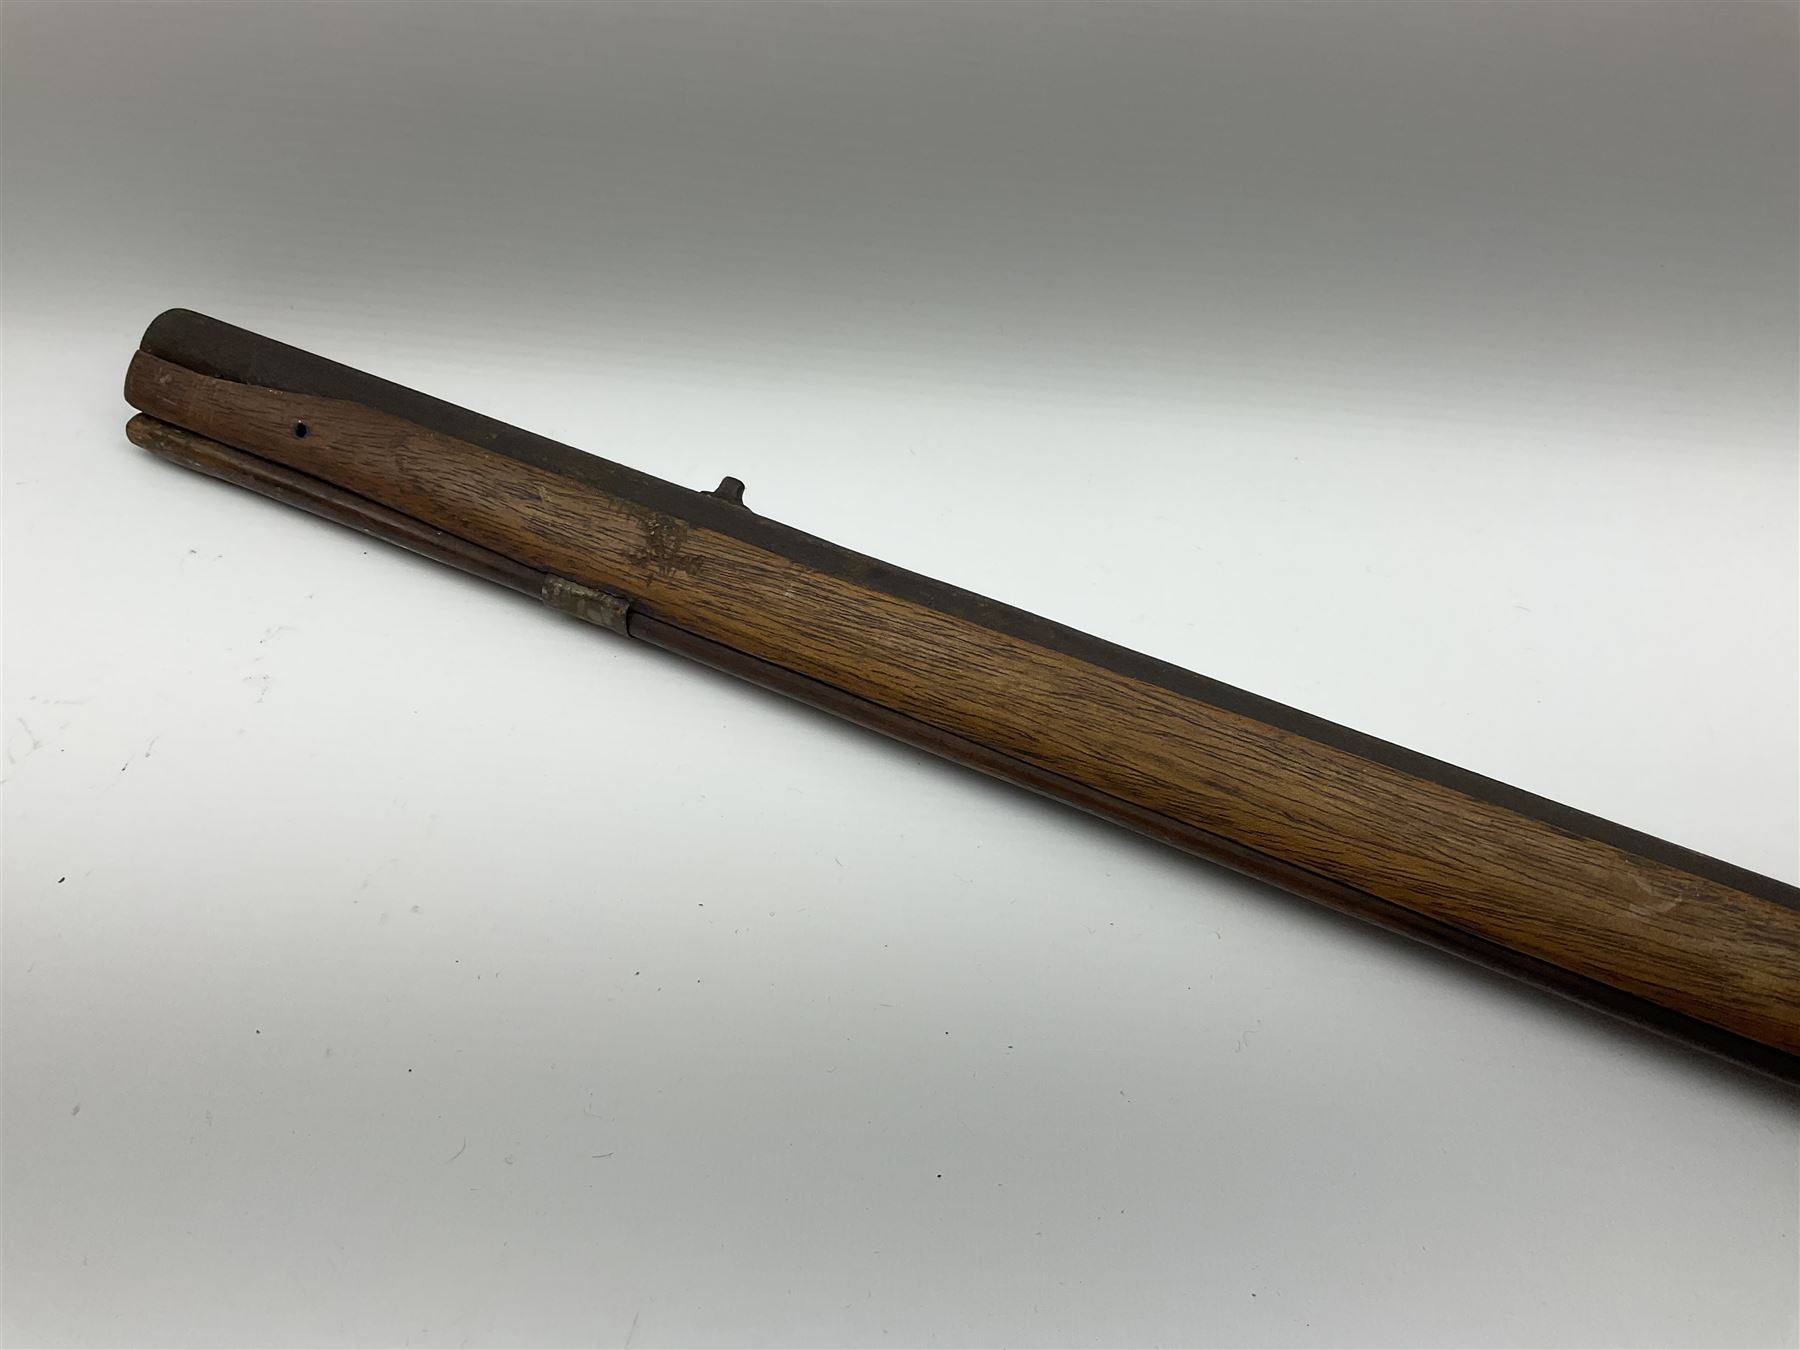 19th century flintlock musket for restoration or display - Bild 10 aus 11